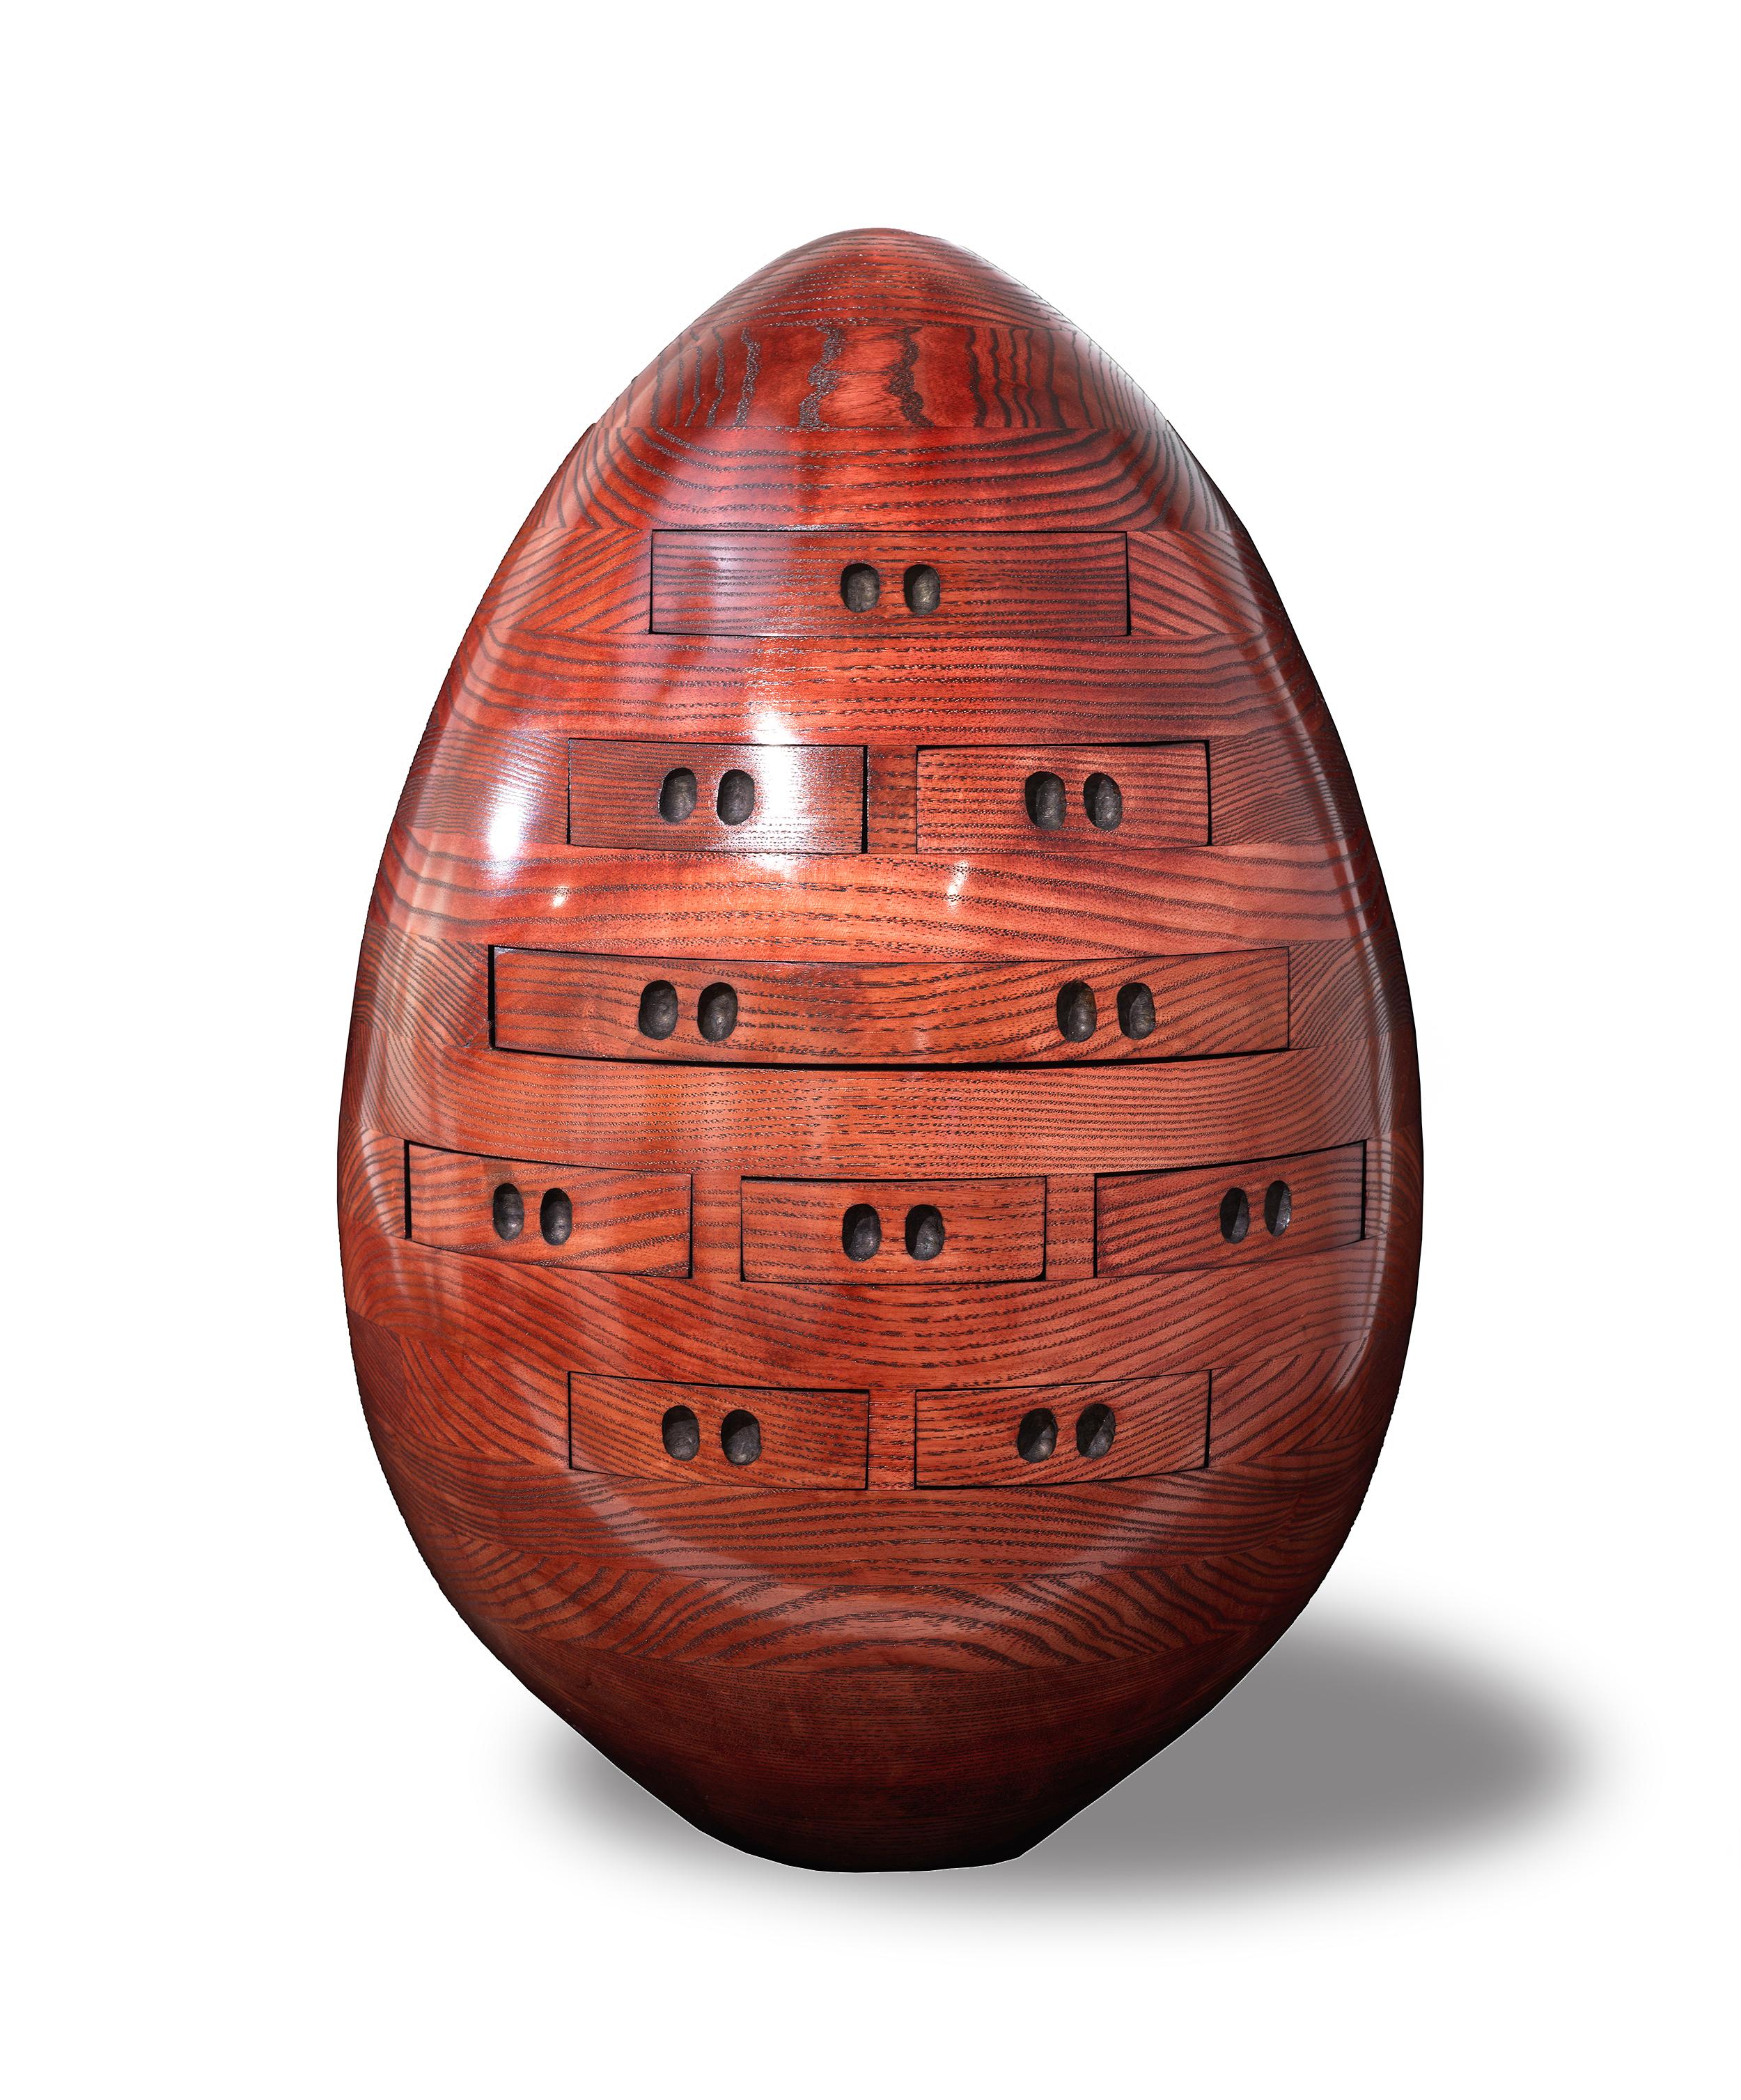 Steve Turner Still-Life Sculpture - Egg in Red - Multi-drawer Chest Sculpture in Hand Carved Wood (Nine Drawers)